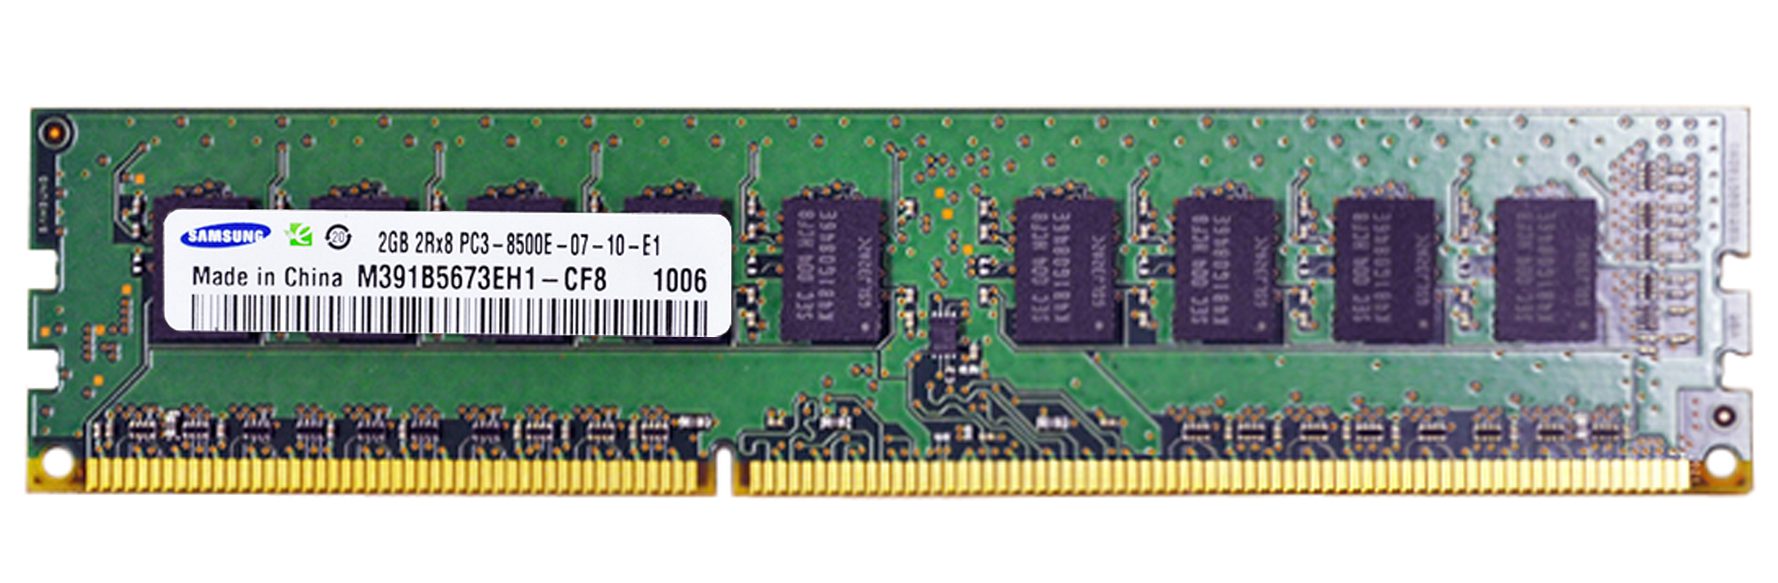 Samsung M391B5673EH1-CF8 PC3-8500E-07-10-E1 2 GB Serverspeicher RAM